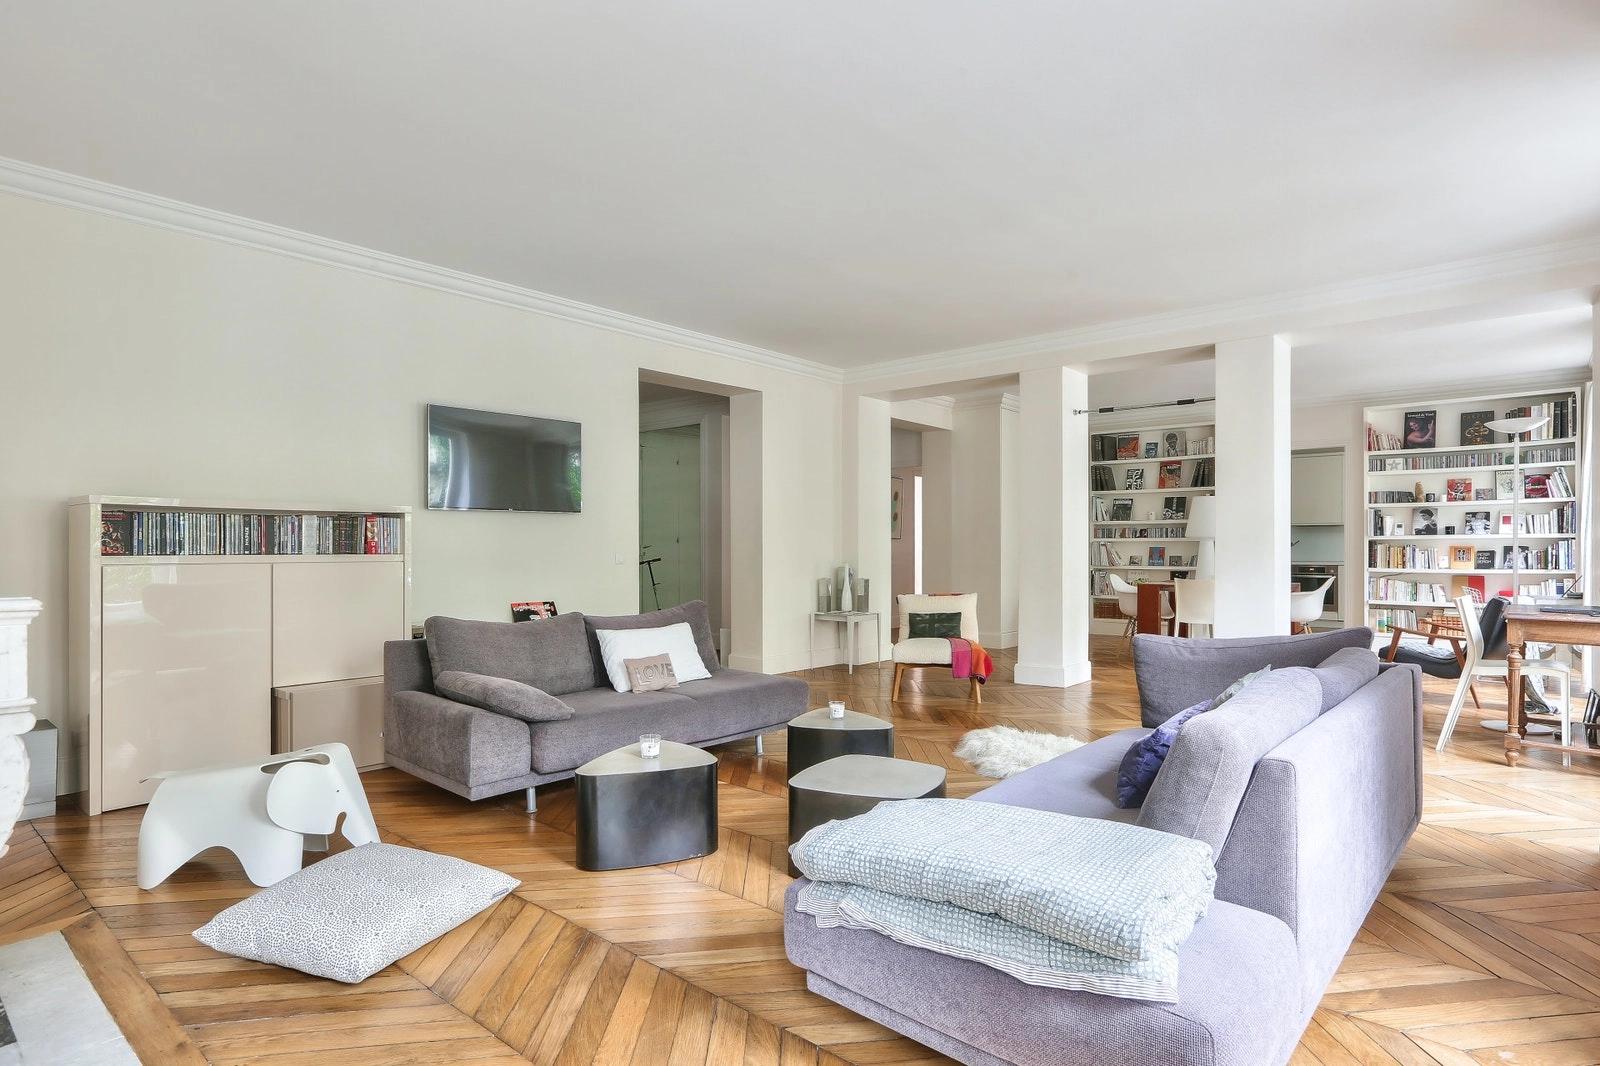 Sala dentro Preciosa, luminosa y cálida casa contemporánea de estilo Haussmann - 3